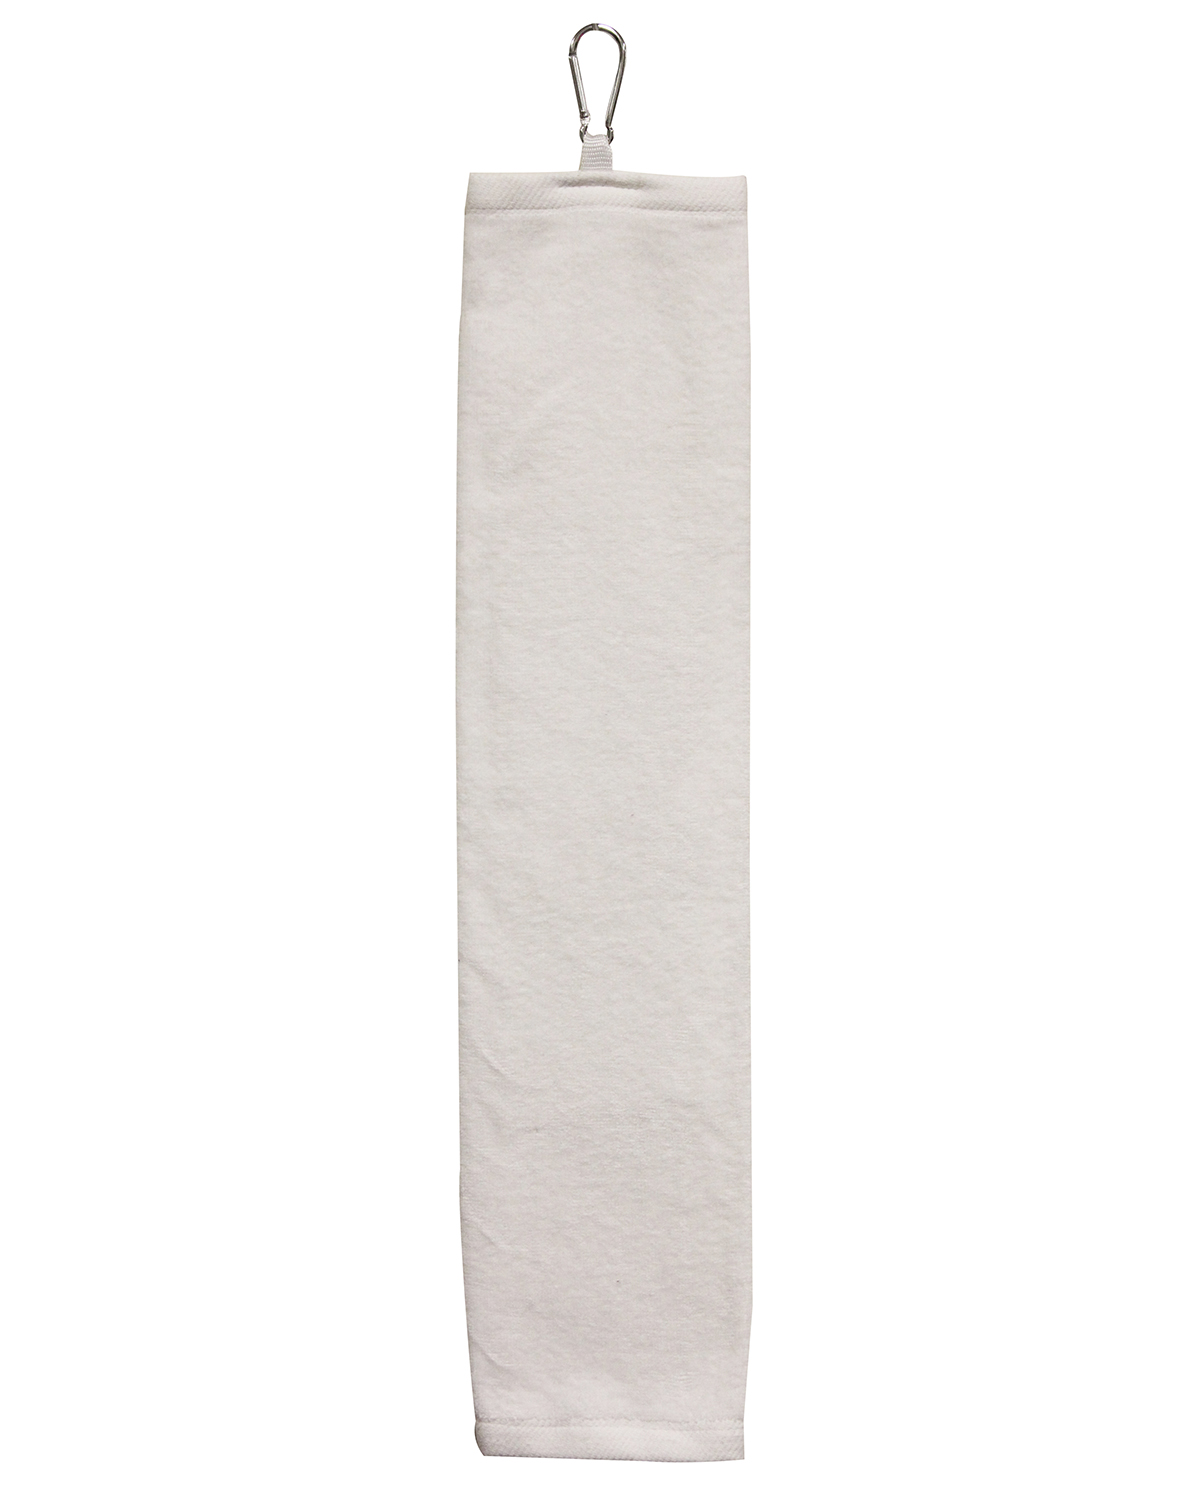 Carmel Towel Company C1624 - World's Greatest Golf Towel